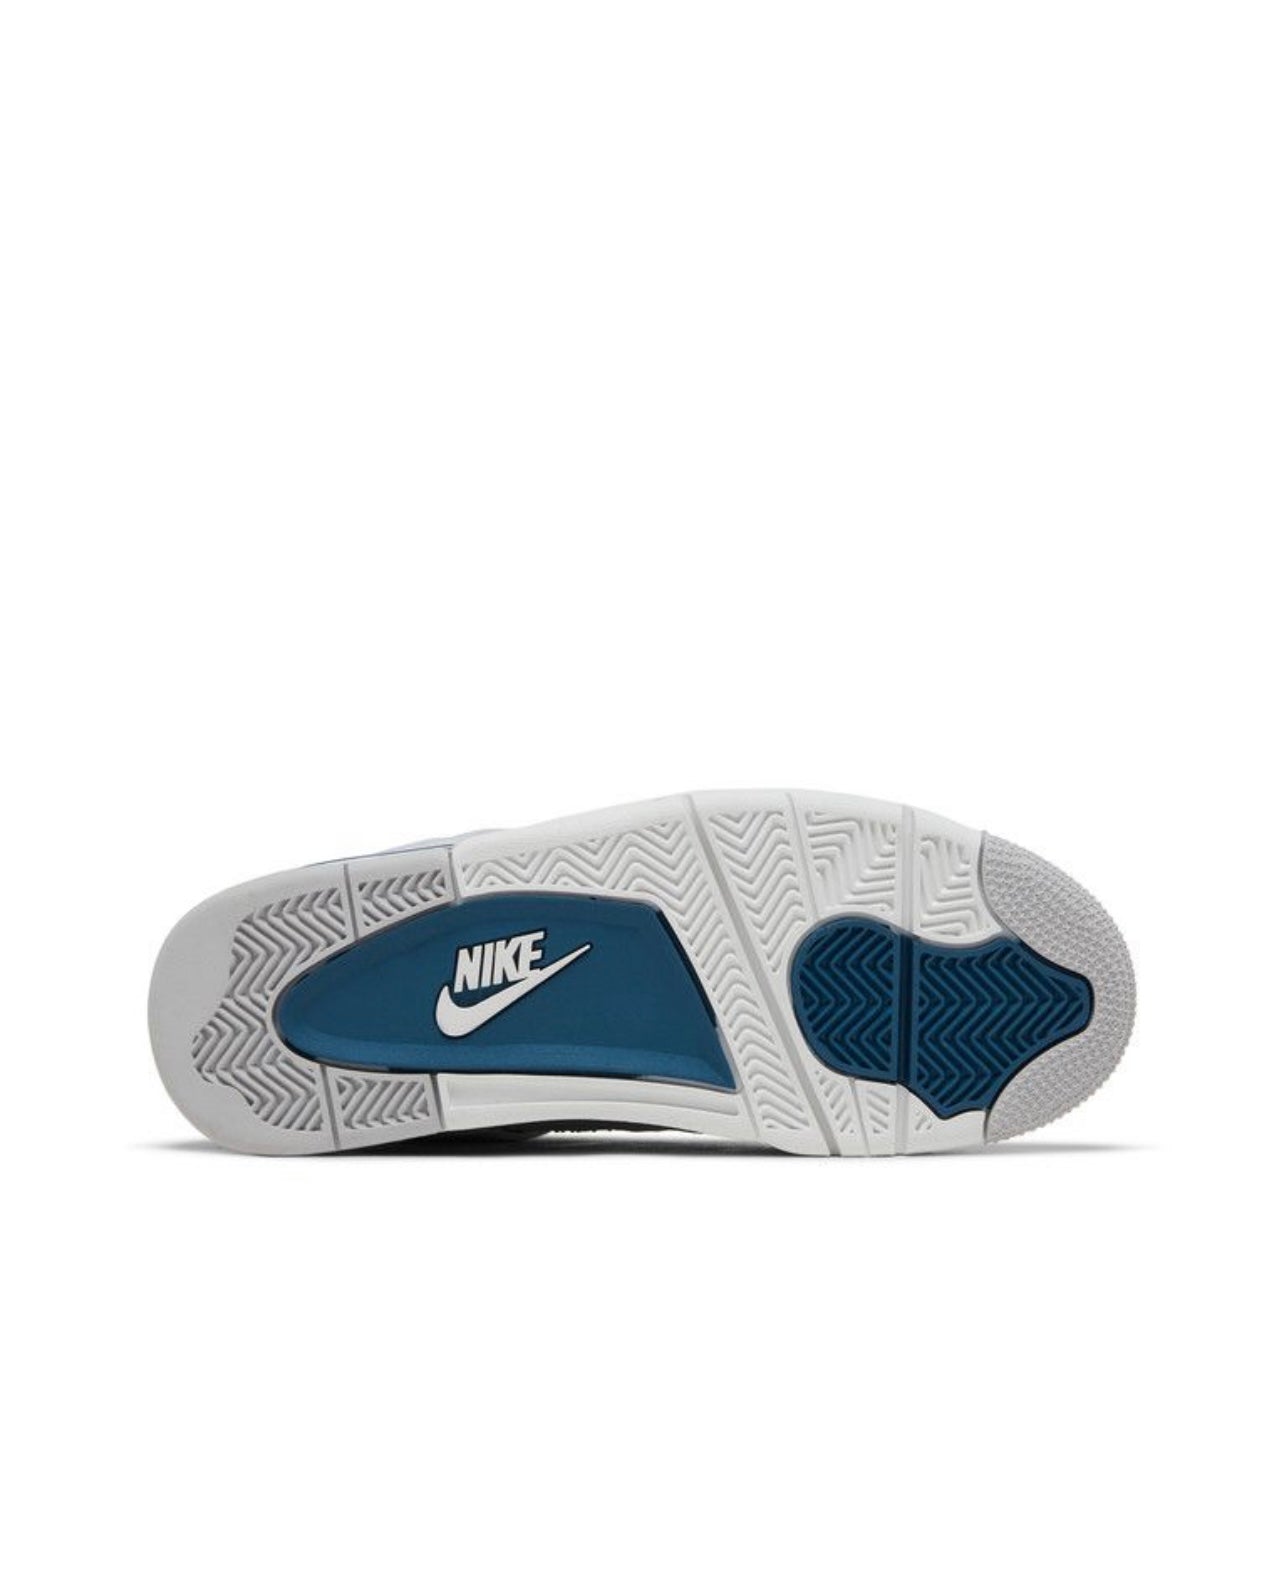 Nike Air Jordan 4 Retro "Industrial Blue"